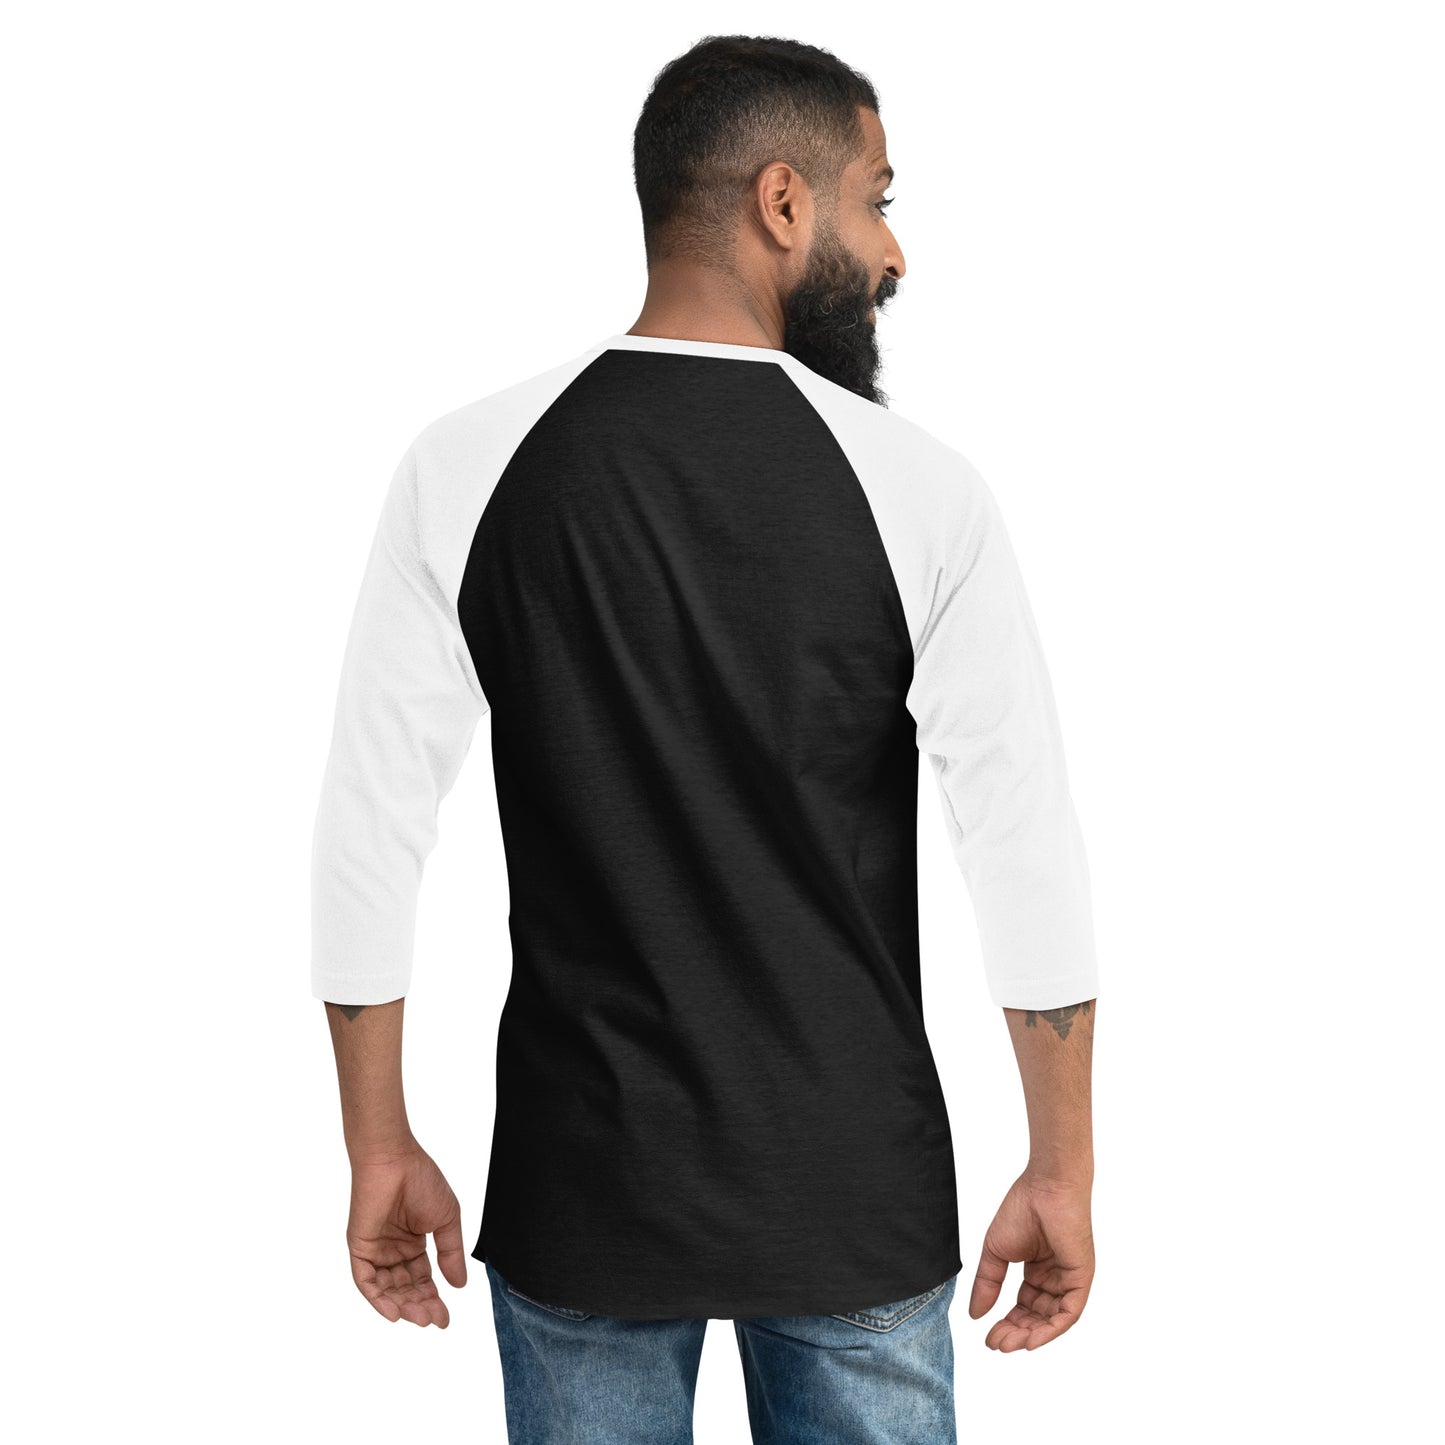 ME O'CLOCK 3/4 sleeve raglan shirt